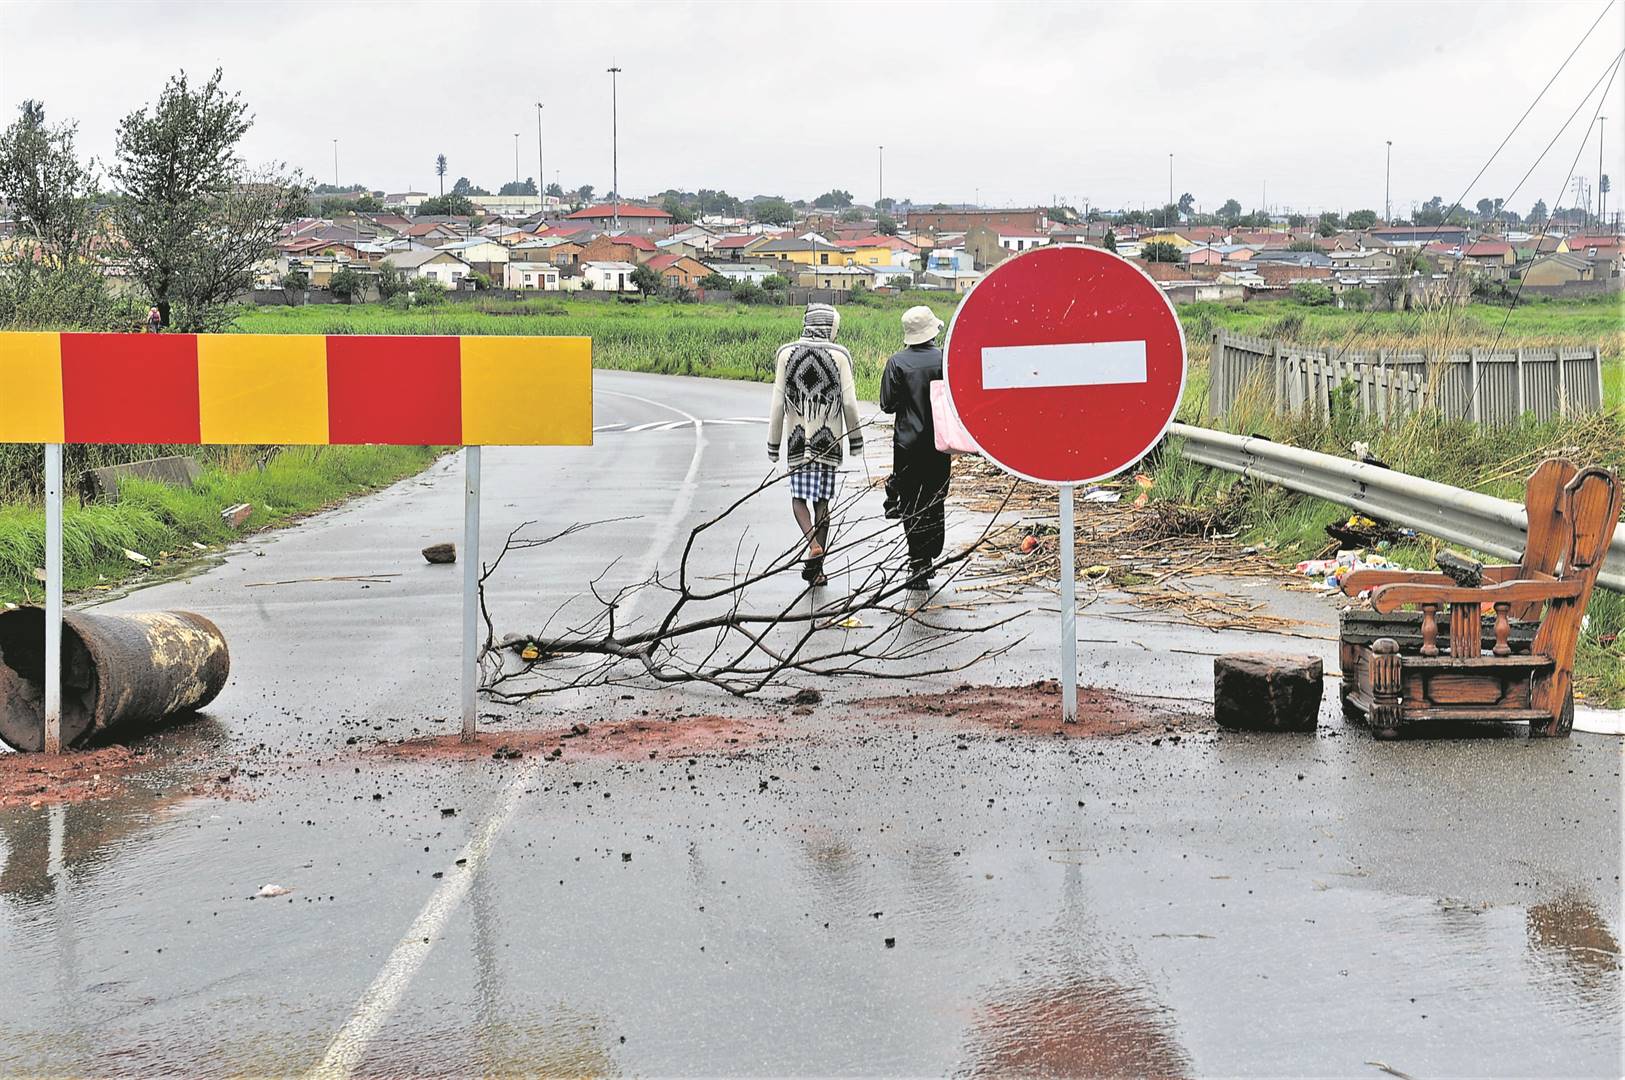 Naledi bridge is one of the roads that has been closed following heavy rainfall across Gauteng. 